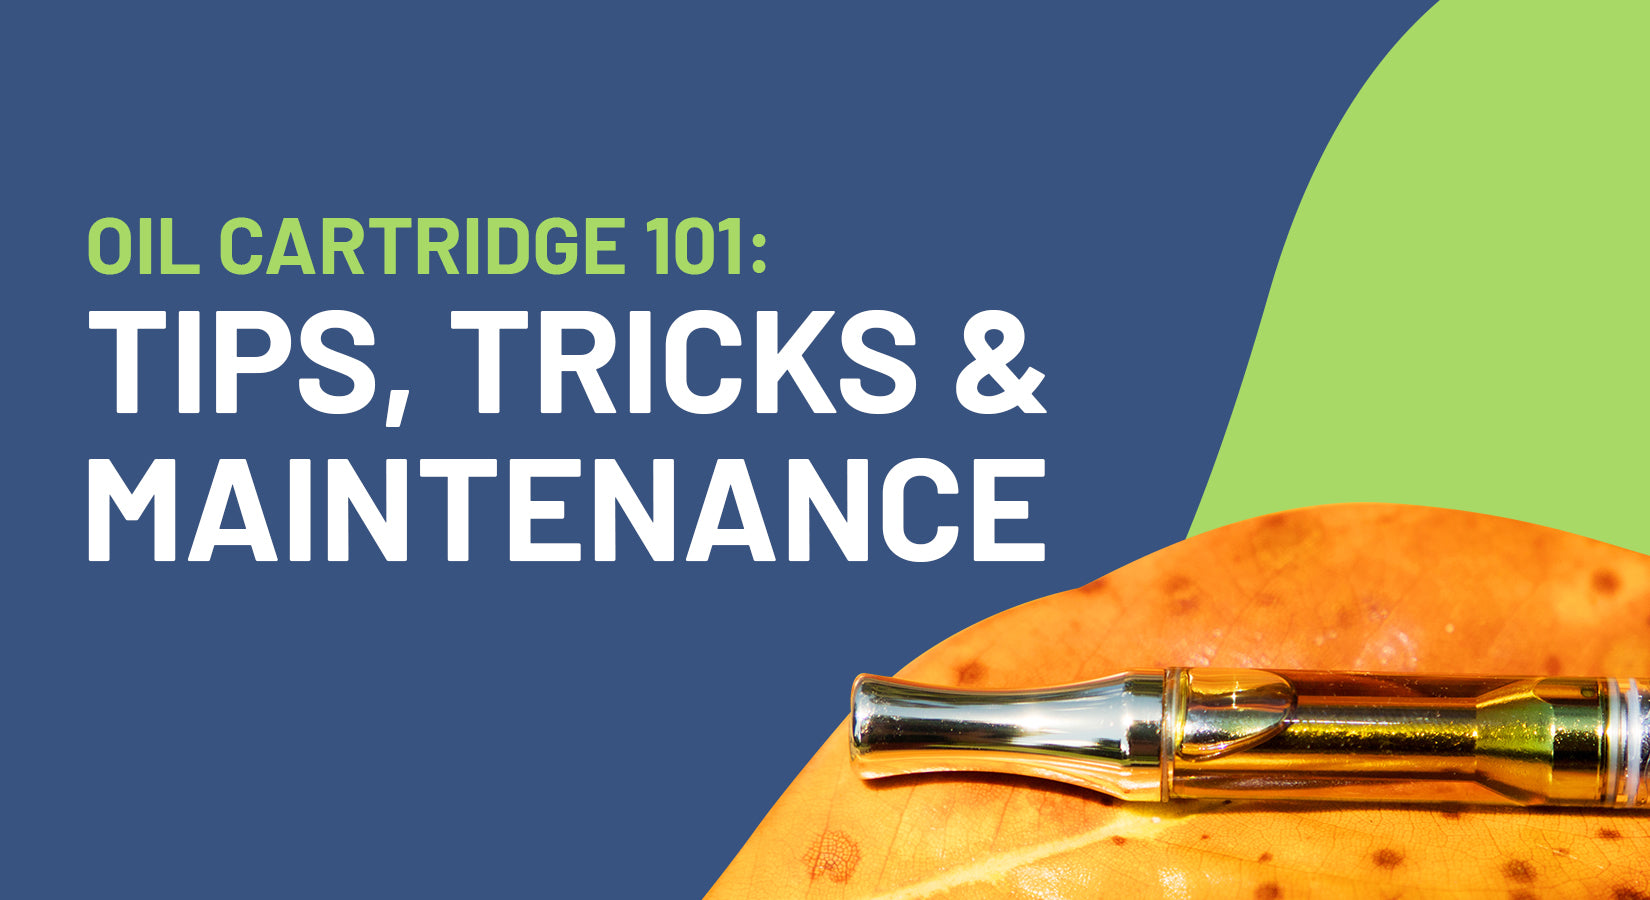 Oil Cartridge 101: Tips, Tricks & Maintenance